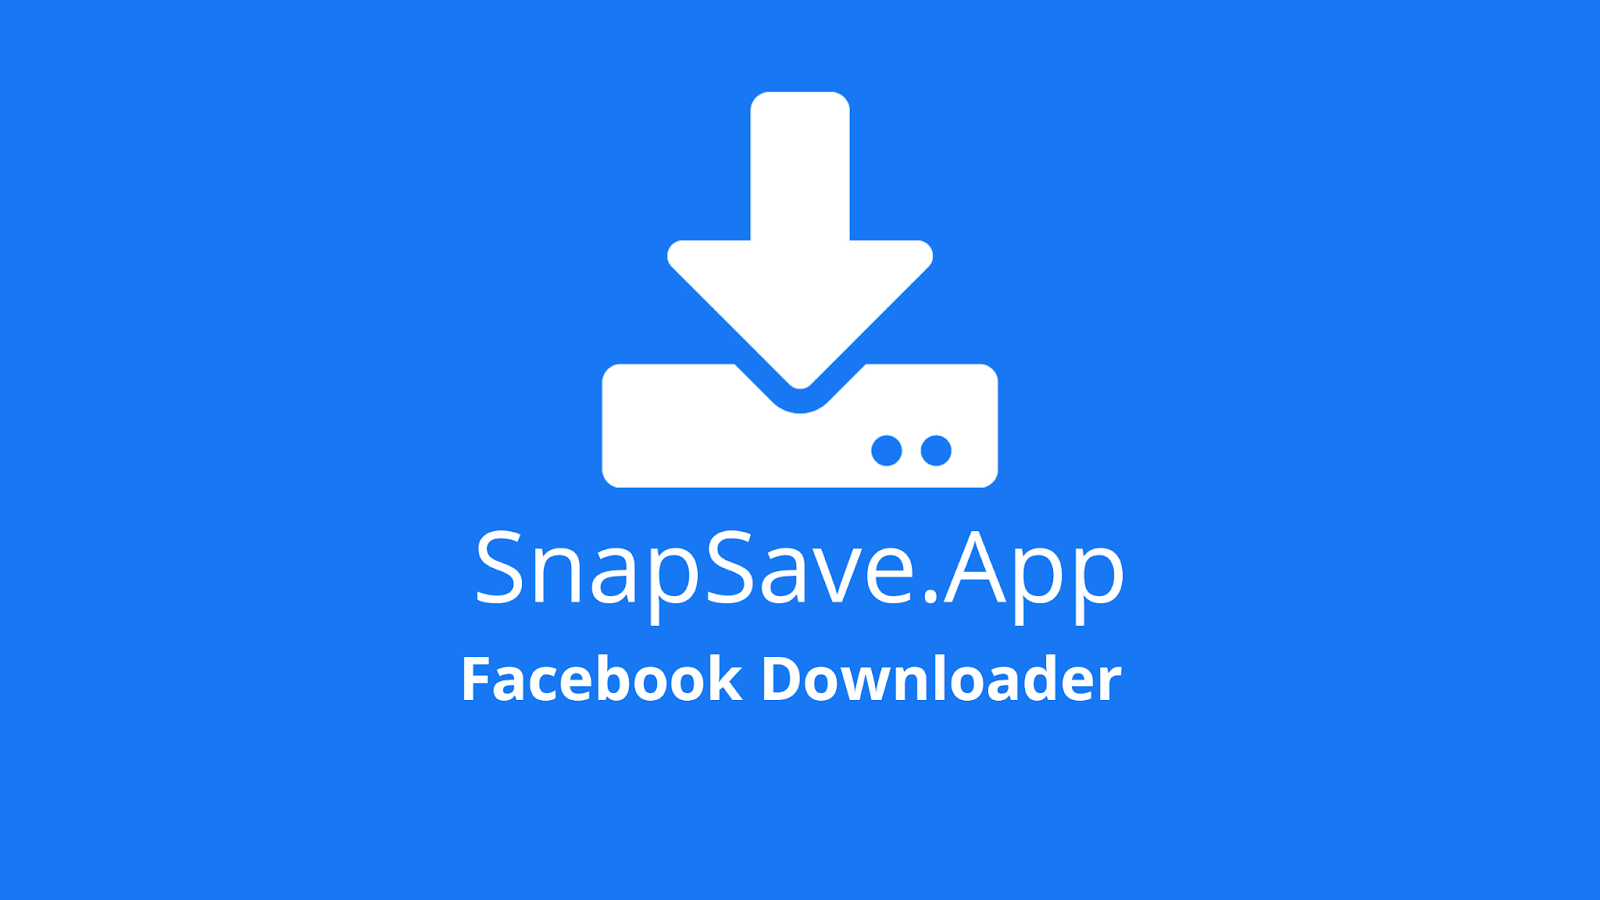 Tải video Facebook về iPhone bằng ứng dụng Snapsave 